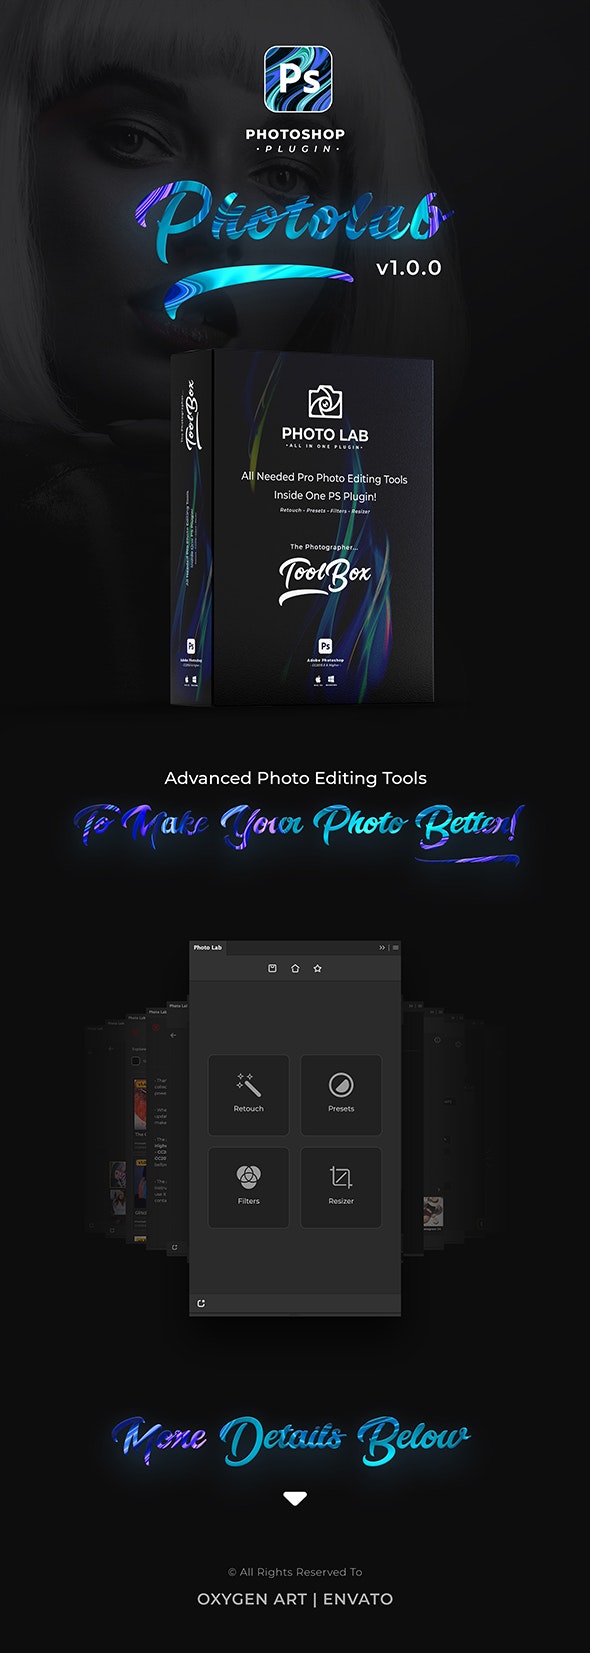 Photo Lab - Advanced Photo Tools | Photoshop Plugin - 37658946 ملحق للفوتوشوب كامل